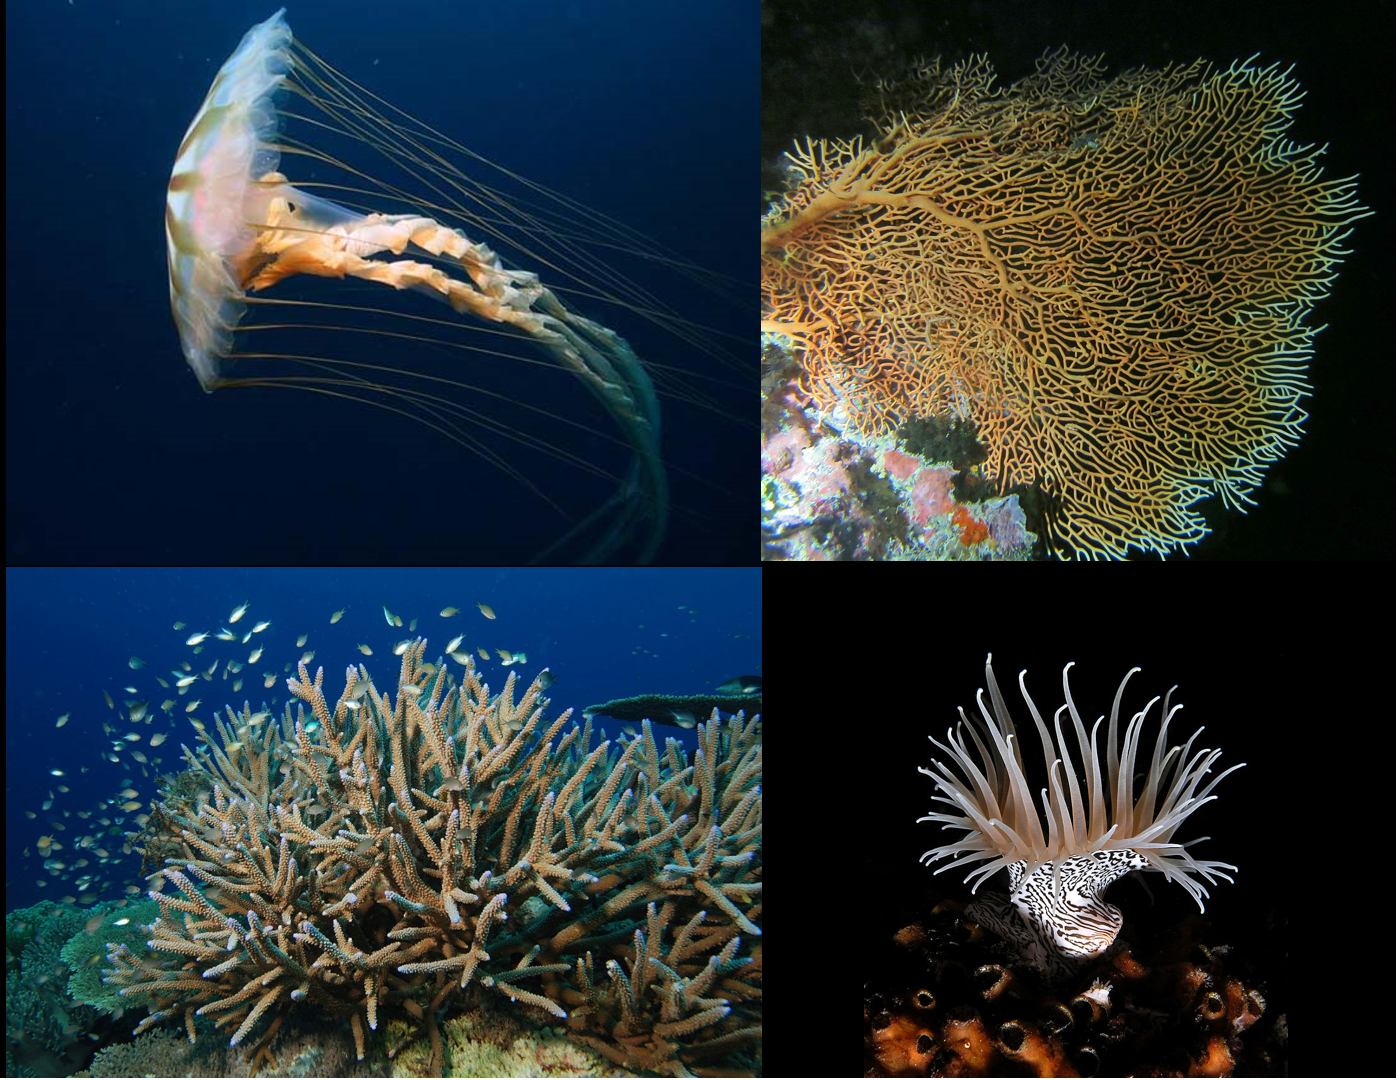 Four examples of Cnidaria: A jellyfish Chrysaora melanaster, a gorgonian Annella mollis, a rocky coral Acropora cervicornis, and a sea anemone Nemanthus annamensis.